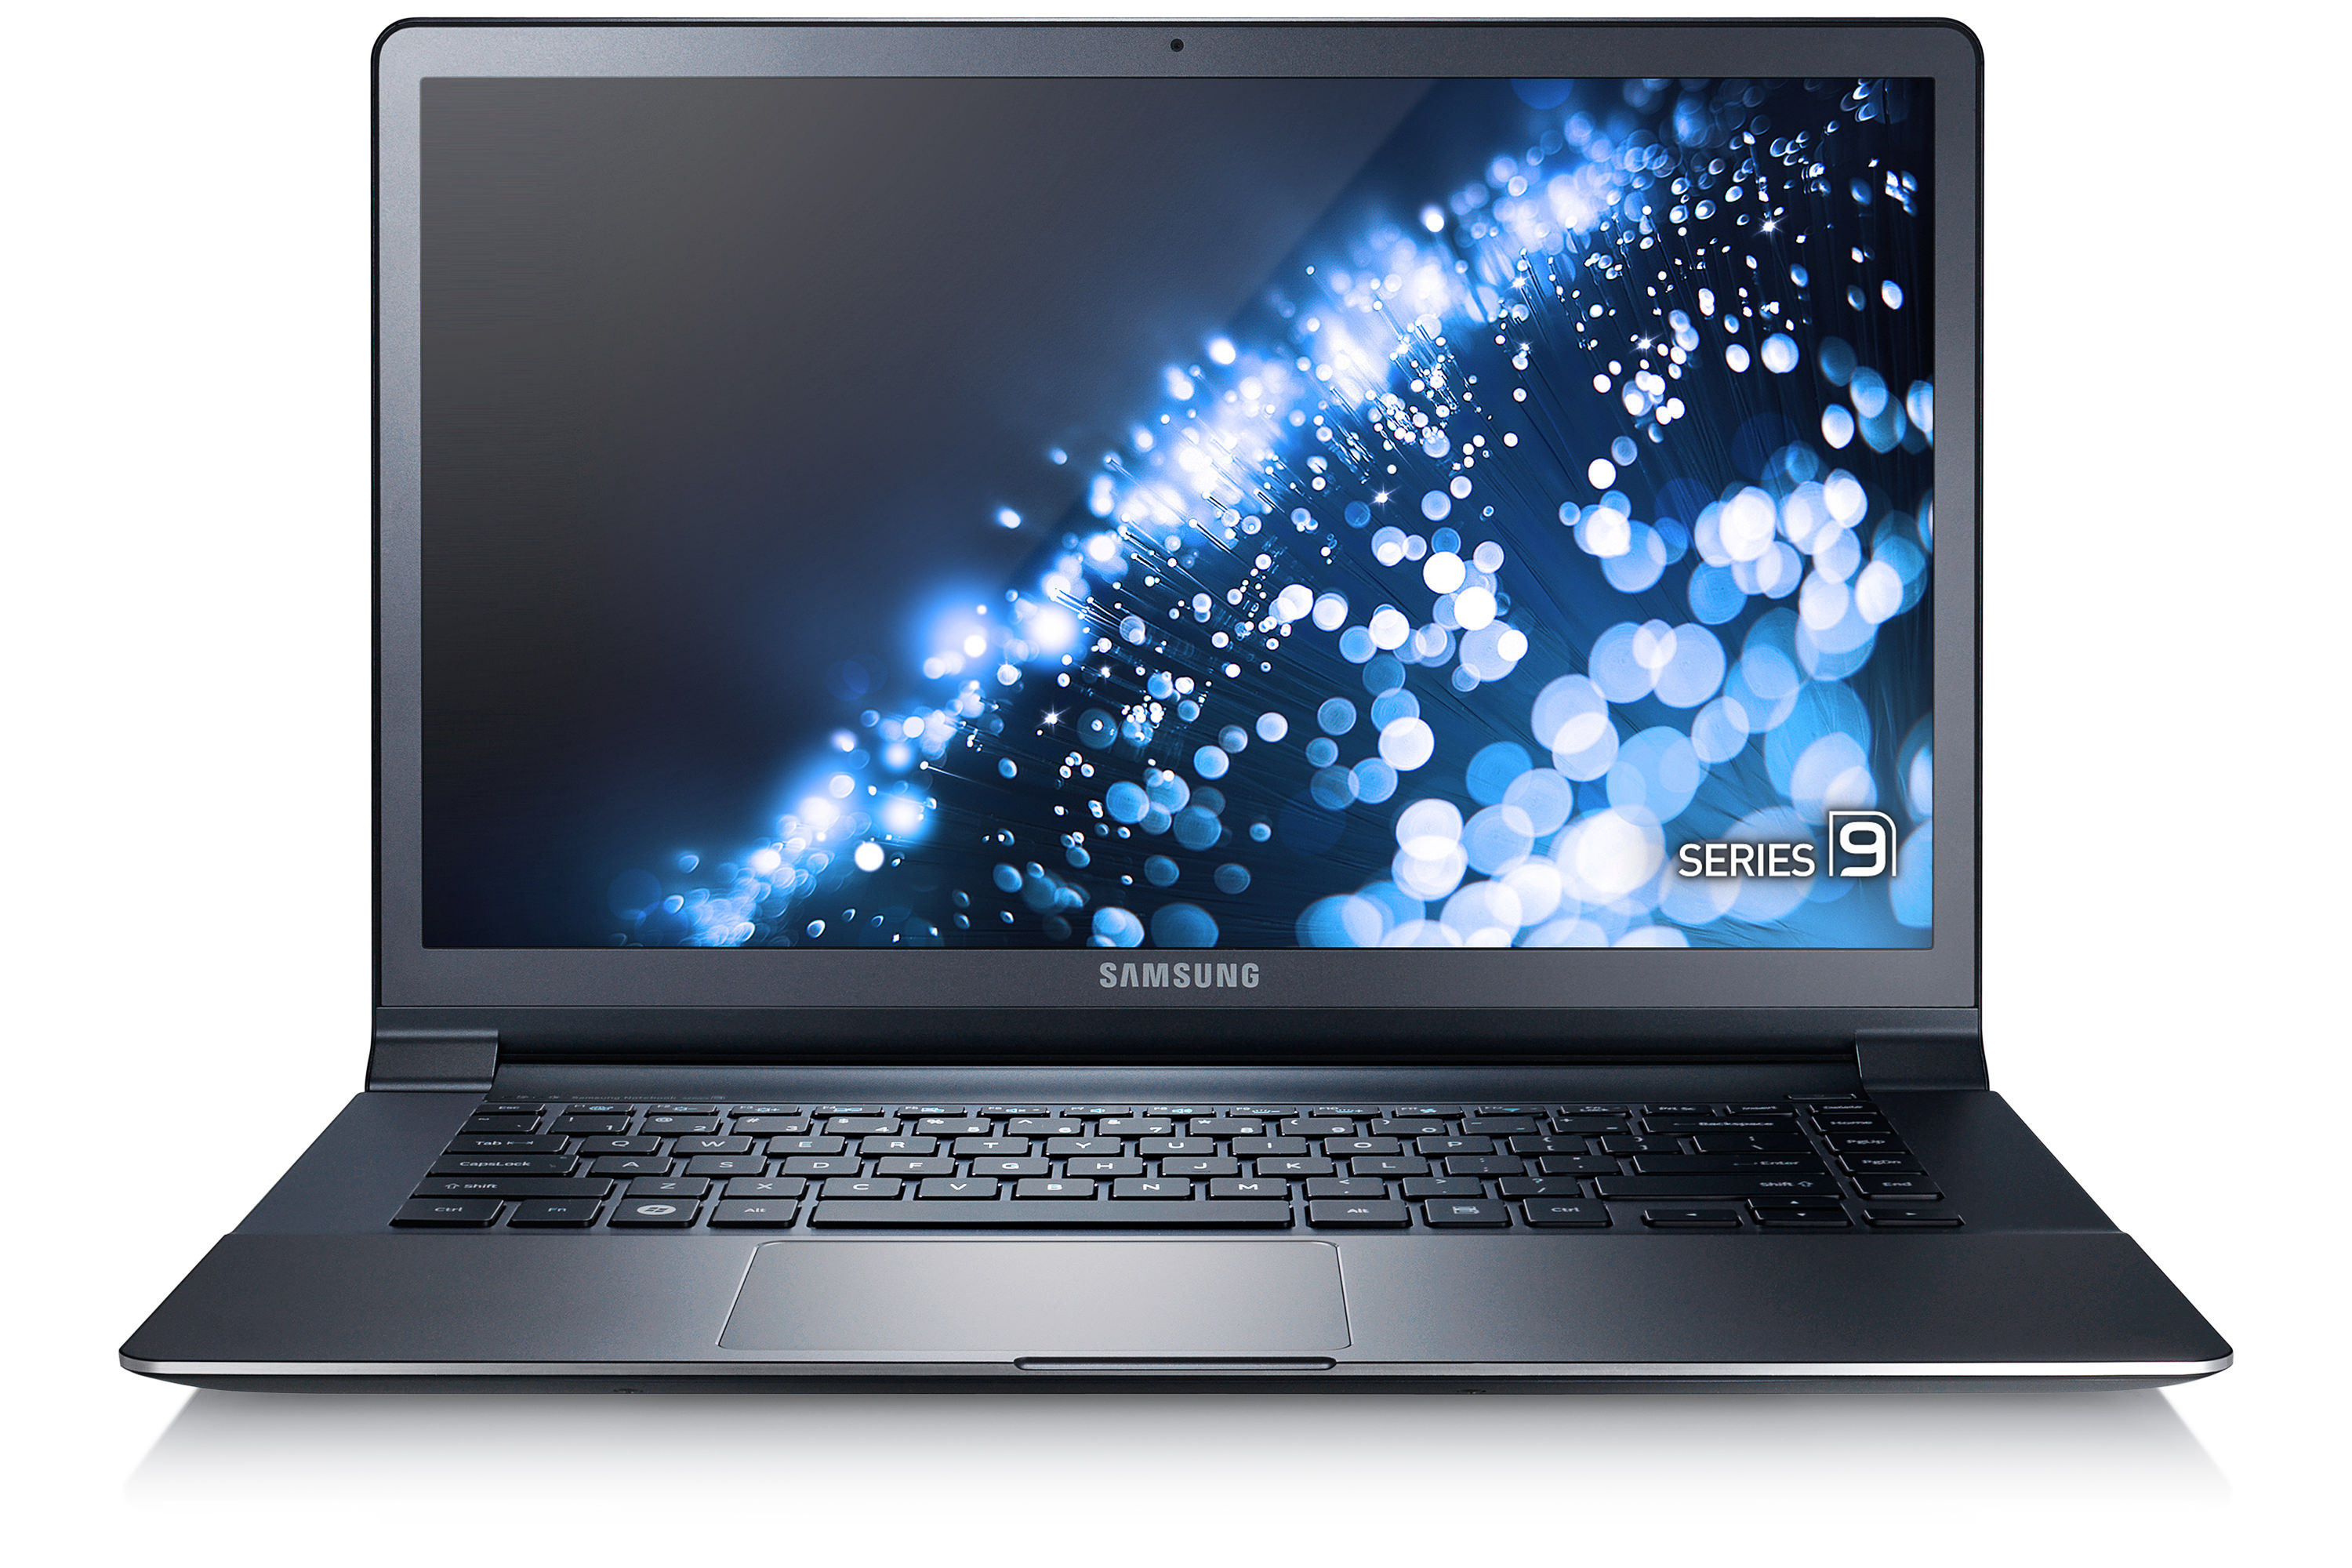 Samsung Series 9 NP900X4C-A02IN Laptop (Core i7 3rd Gen/8 GB/512 GB SSD/Windows 8) Price